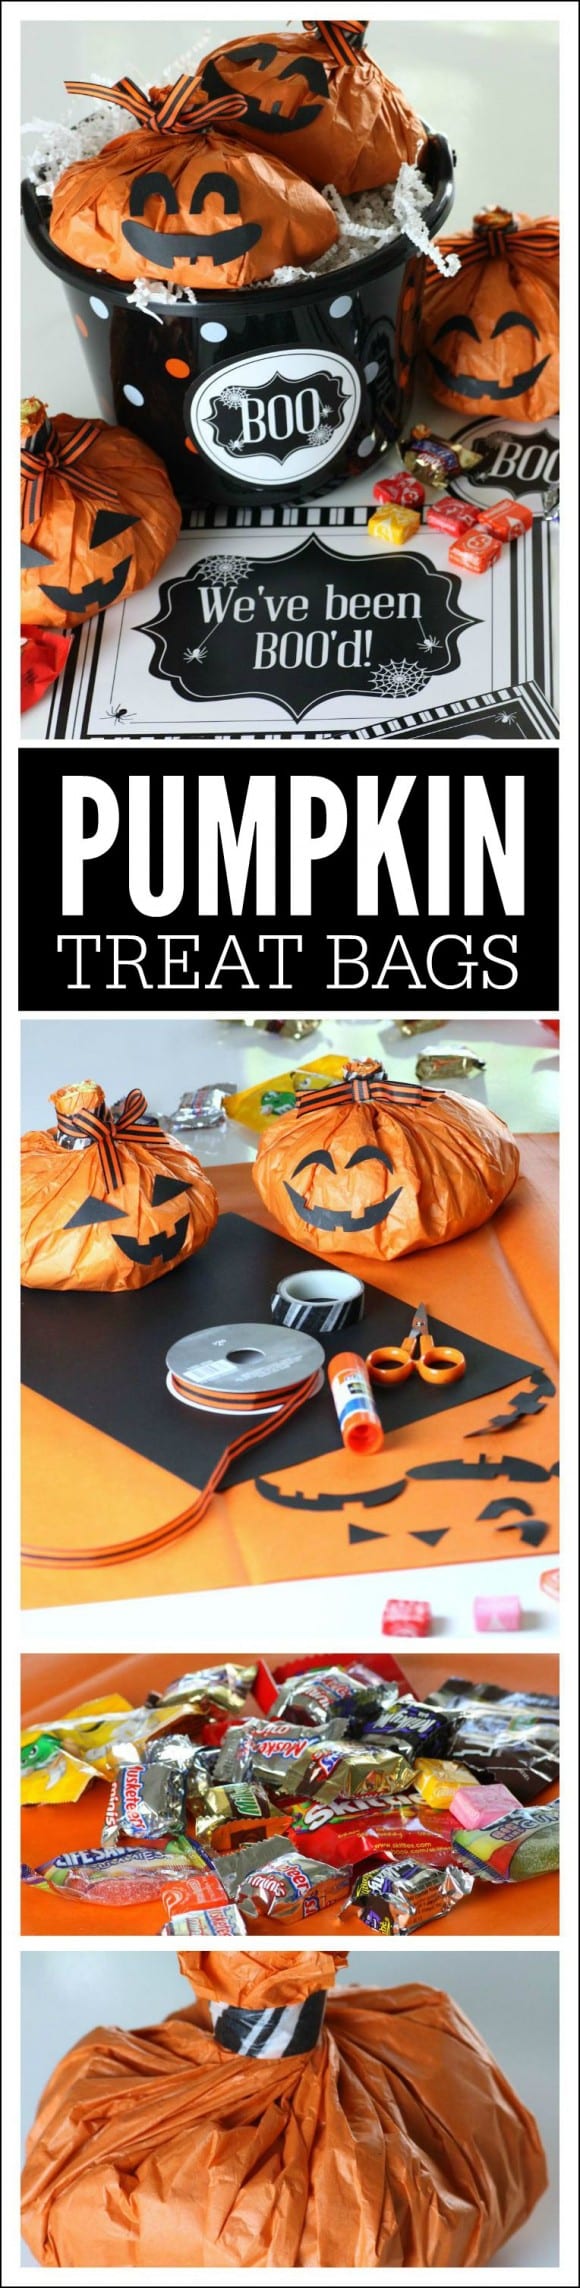 pumpkin-treat-bags-hero